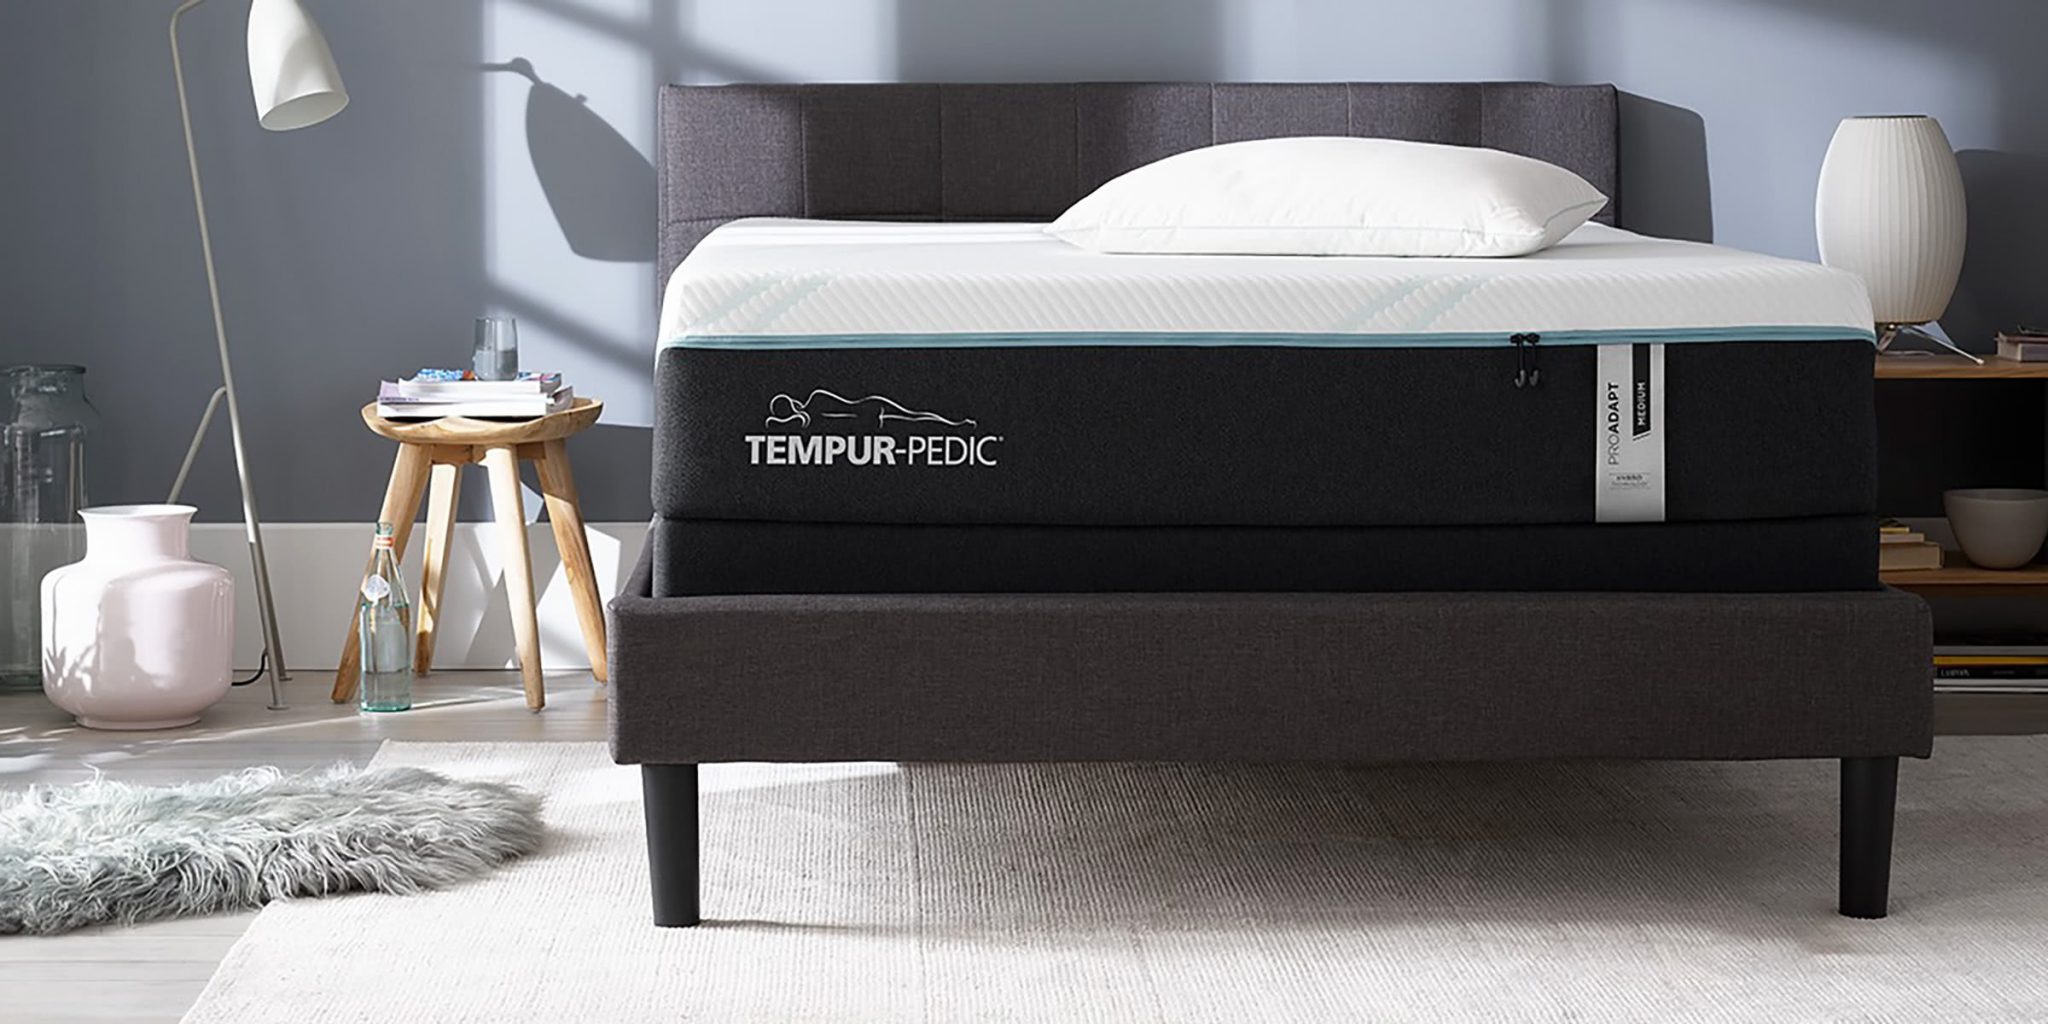 mattress pad on top of tempur pedic